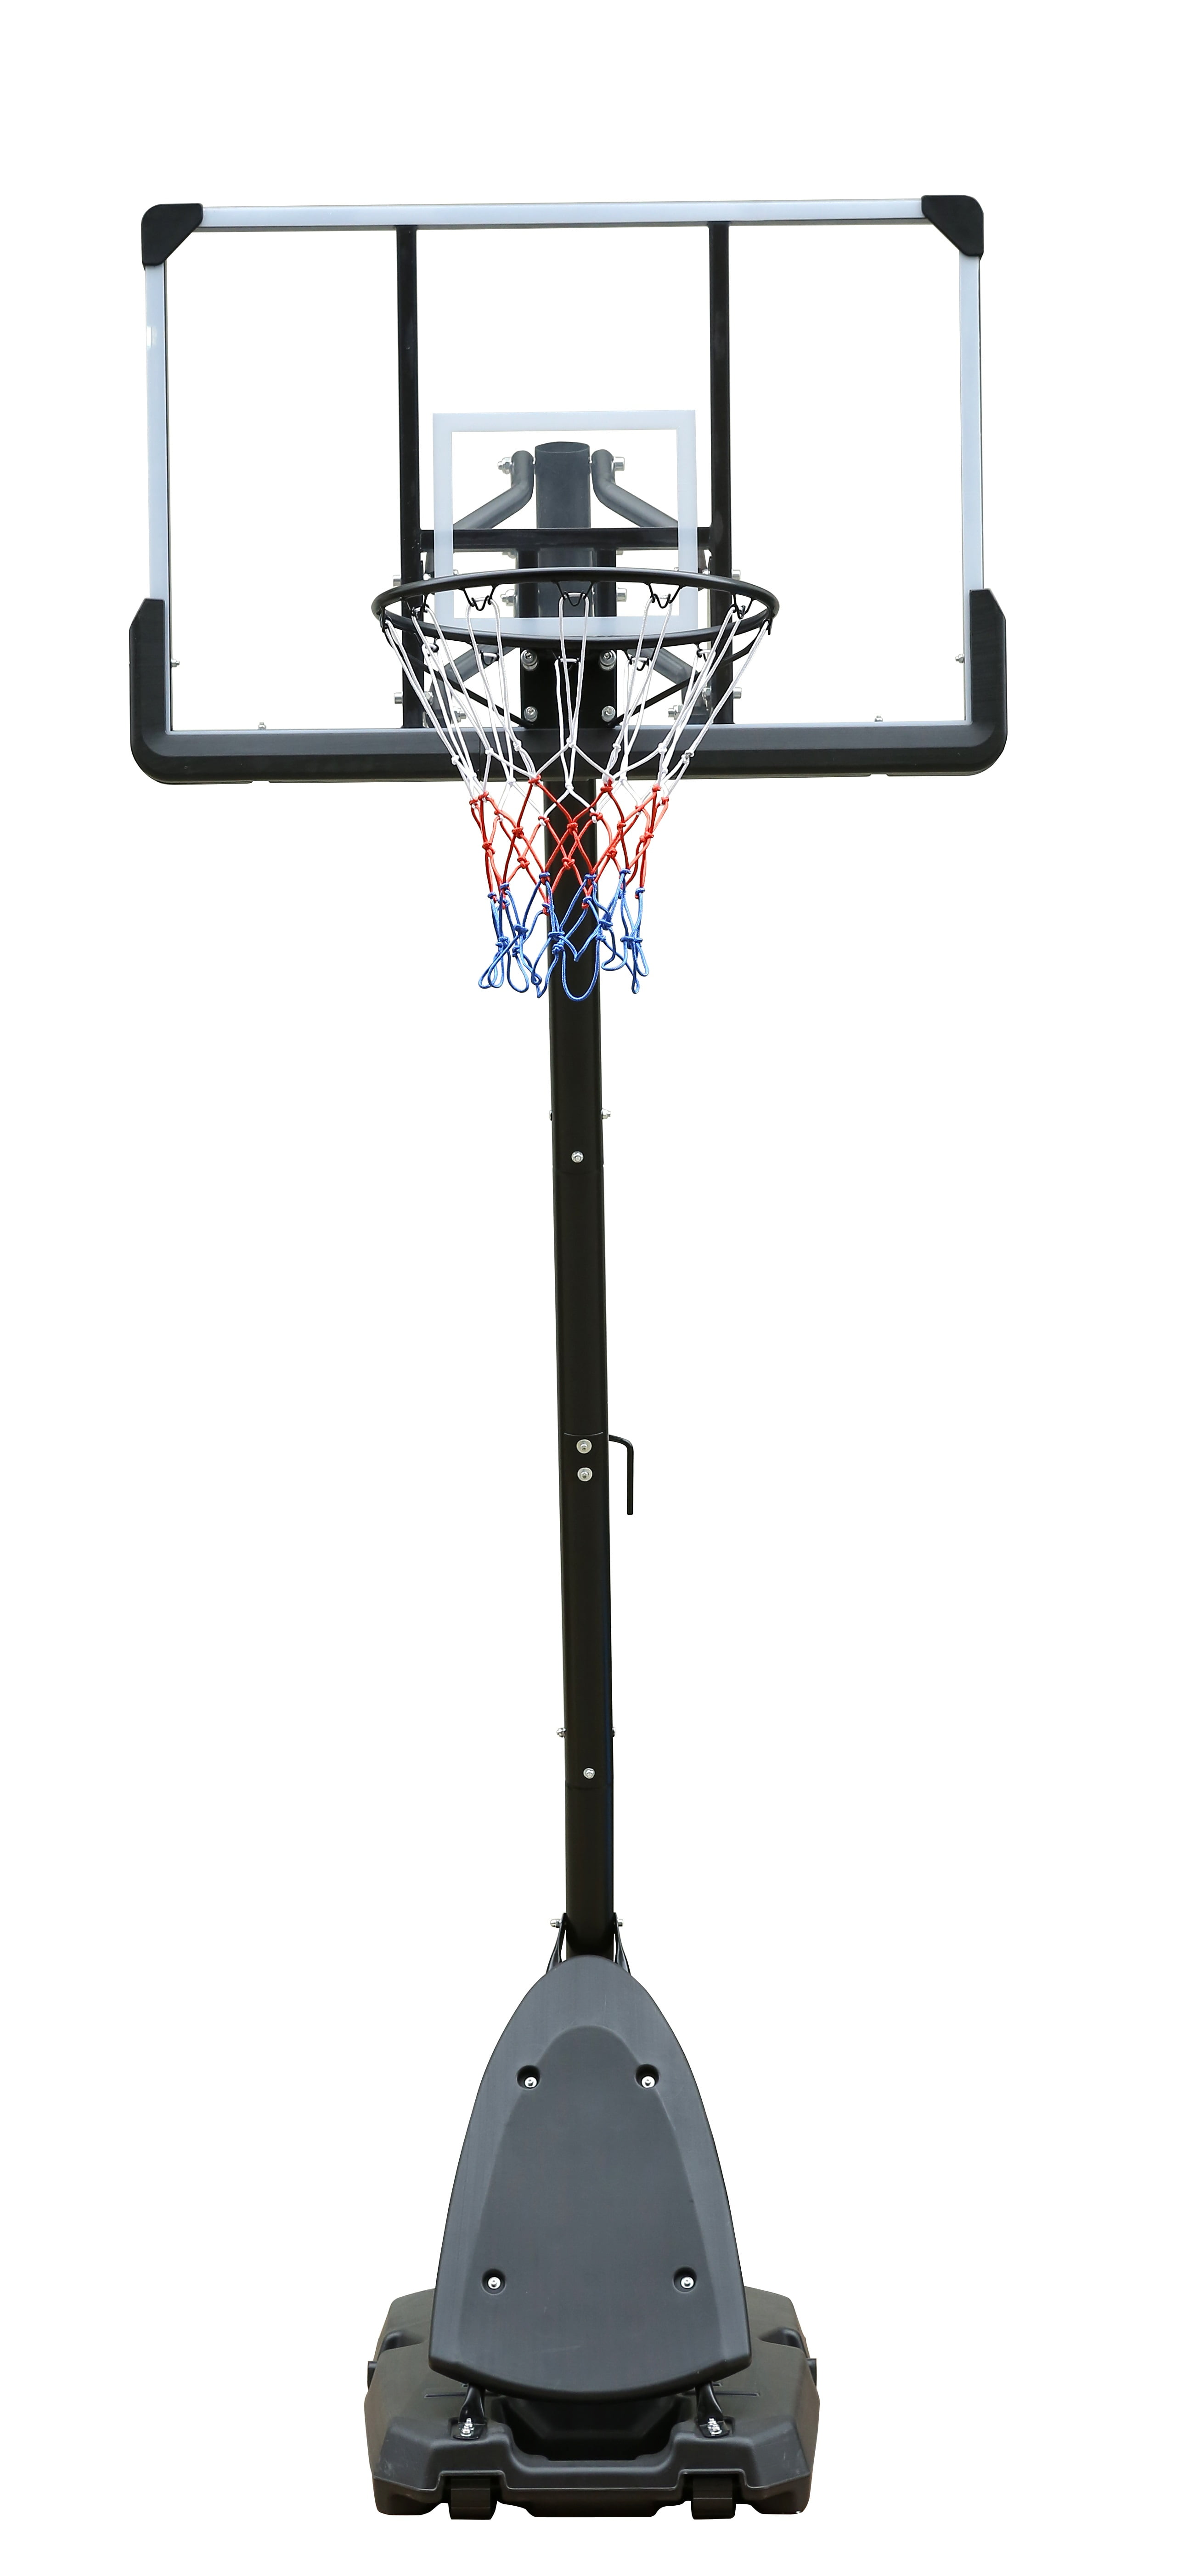 Basketball Rims & Nets Dimensions & Drawings | Dimensions.com